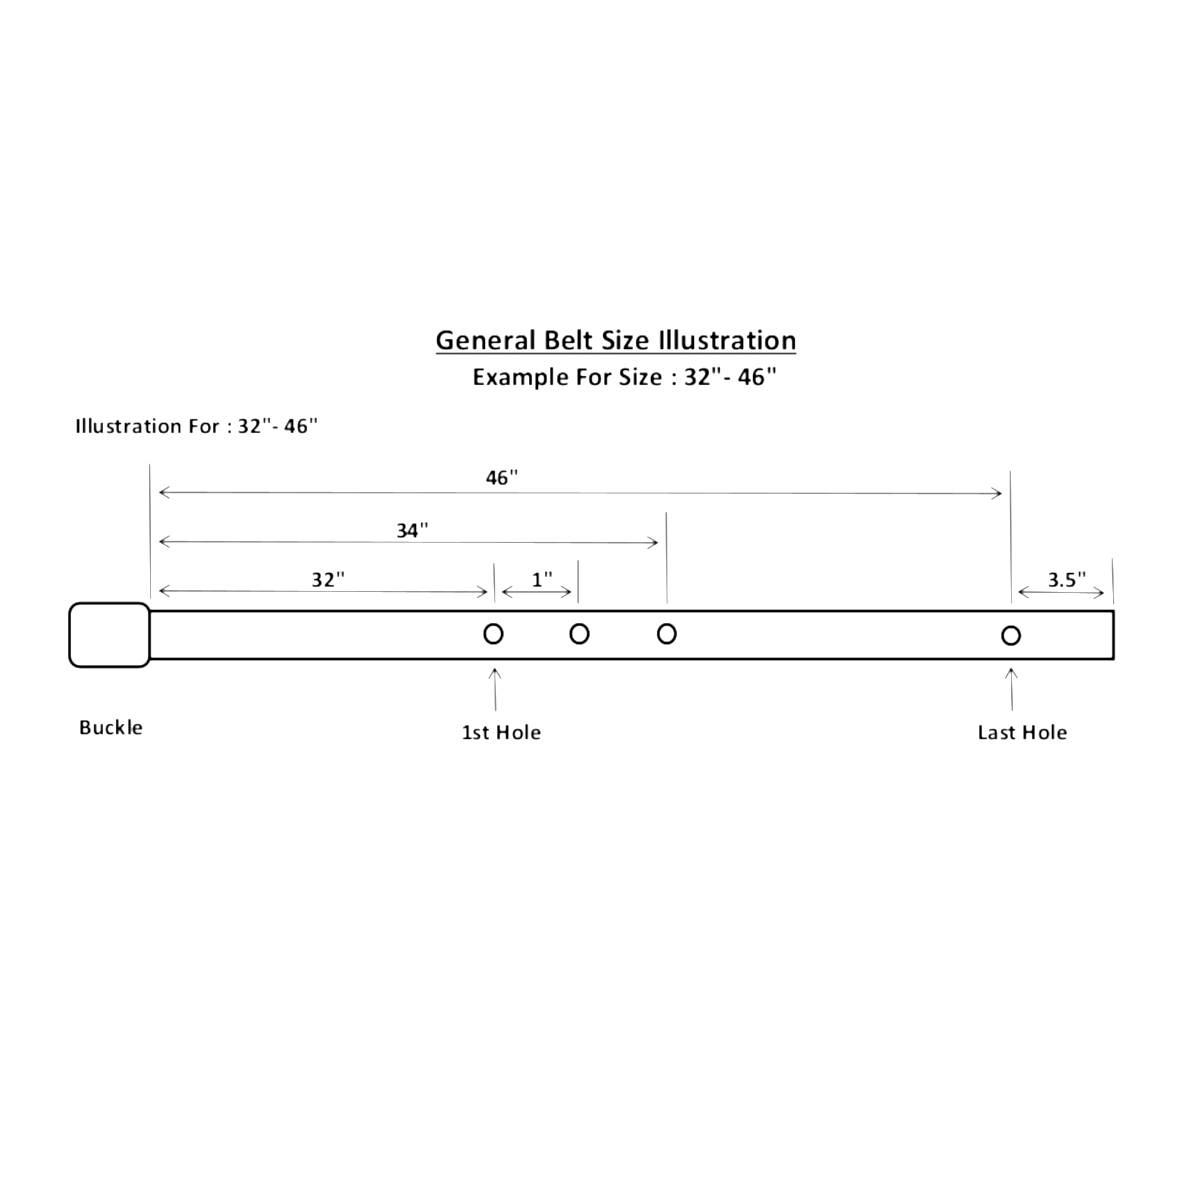 General Belt Size Illustration - Showing How the Length of the Belt is Measured